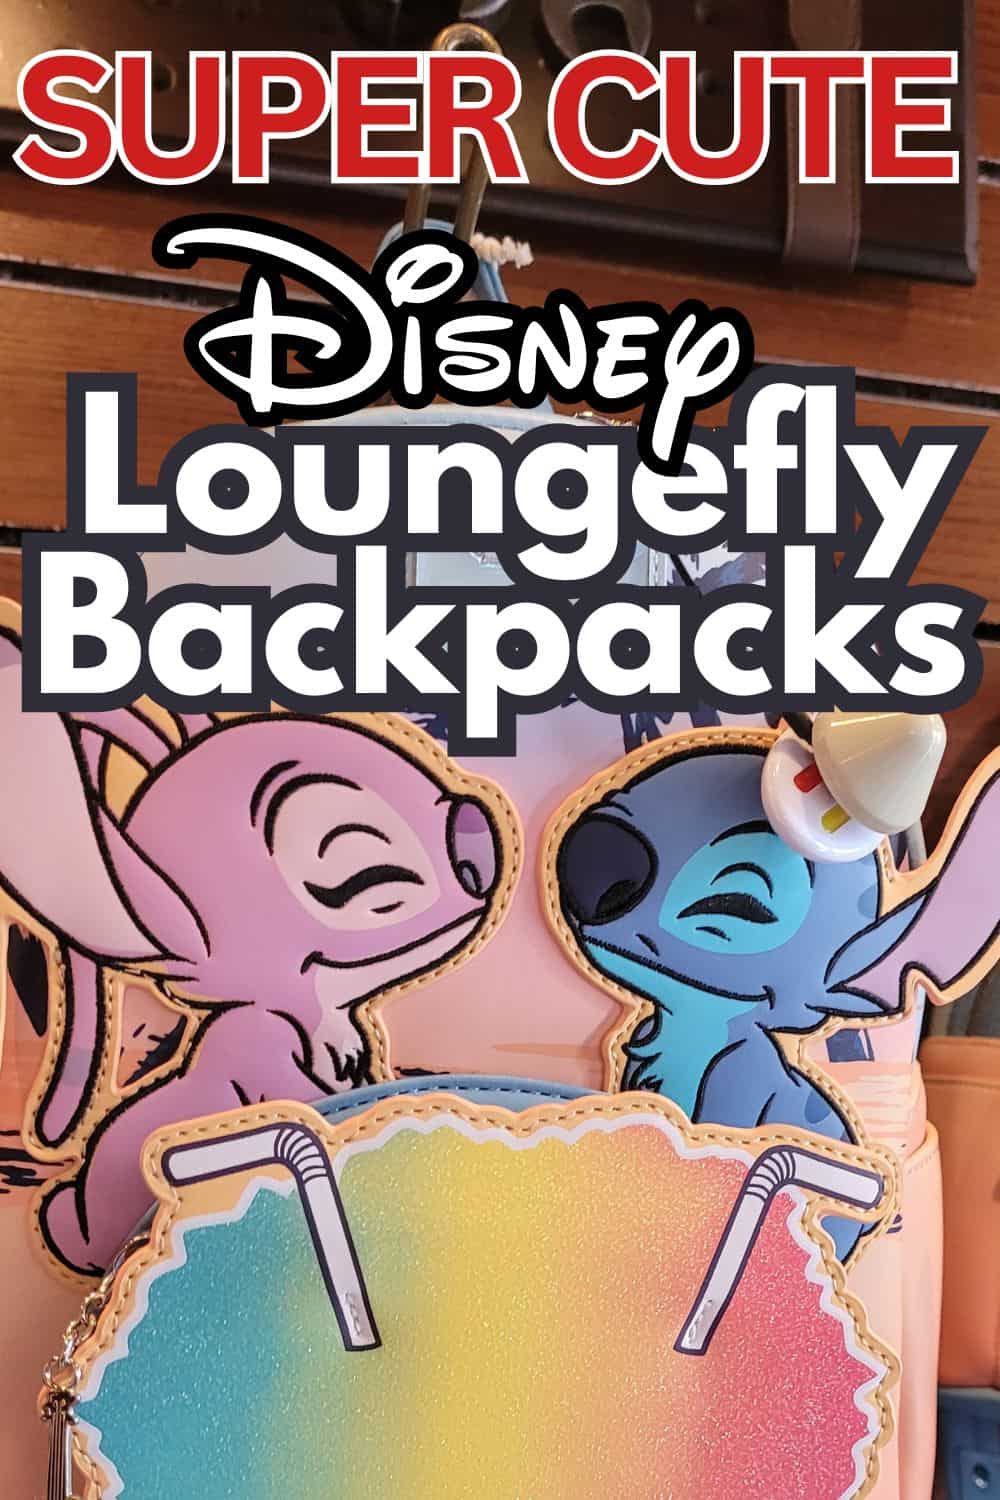 Cute Disney Backpacks for Adults